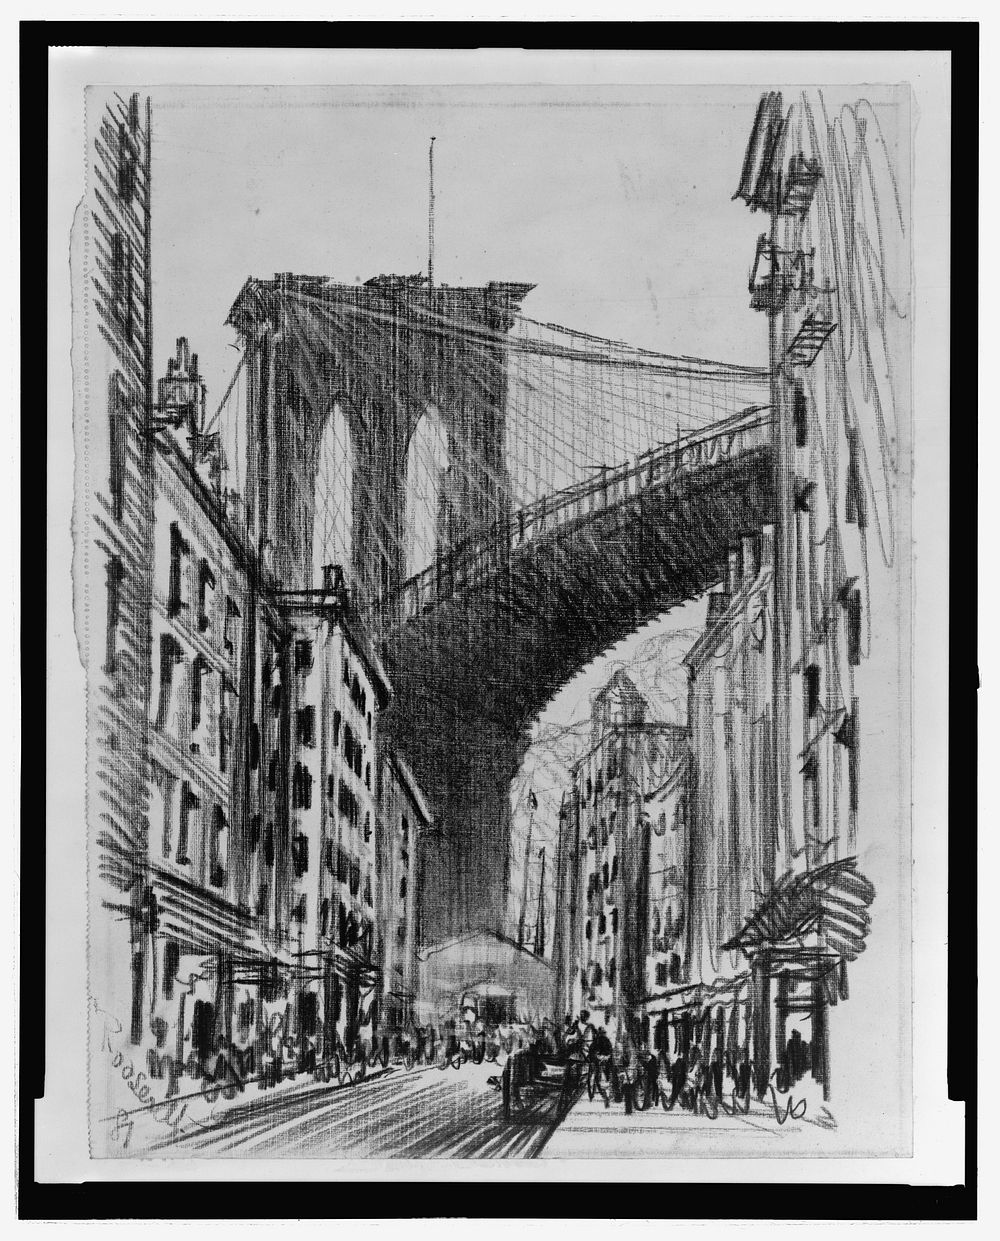 Tenements under Brooklyn Bridge (Brooklyn Bridge tenements) (ca. 1909) drawing in high resolution by Joseph Pennell.